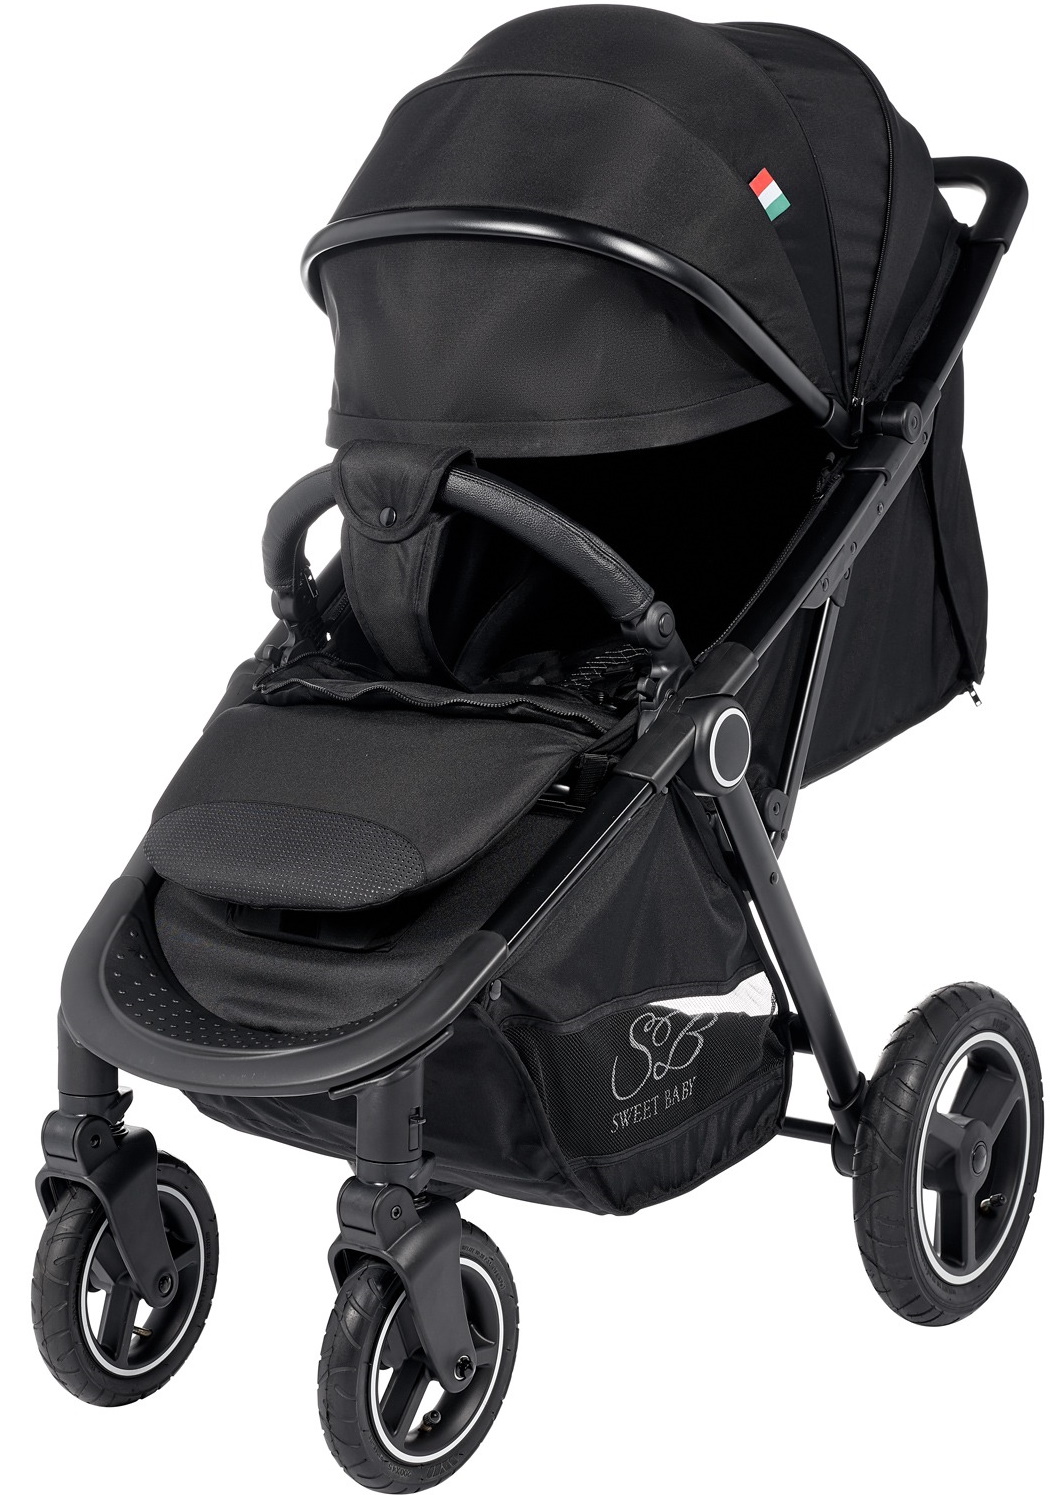 Прогулочная коляска Sweet Baby Suburban Compatto Air, цвет: черный прогулочная коляска sweet baby suburban compatto air надувные колеса